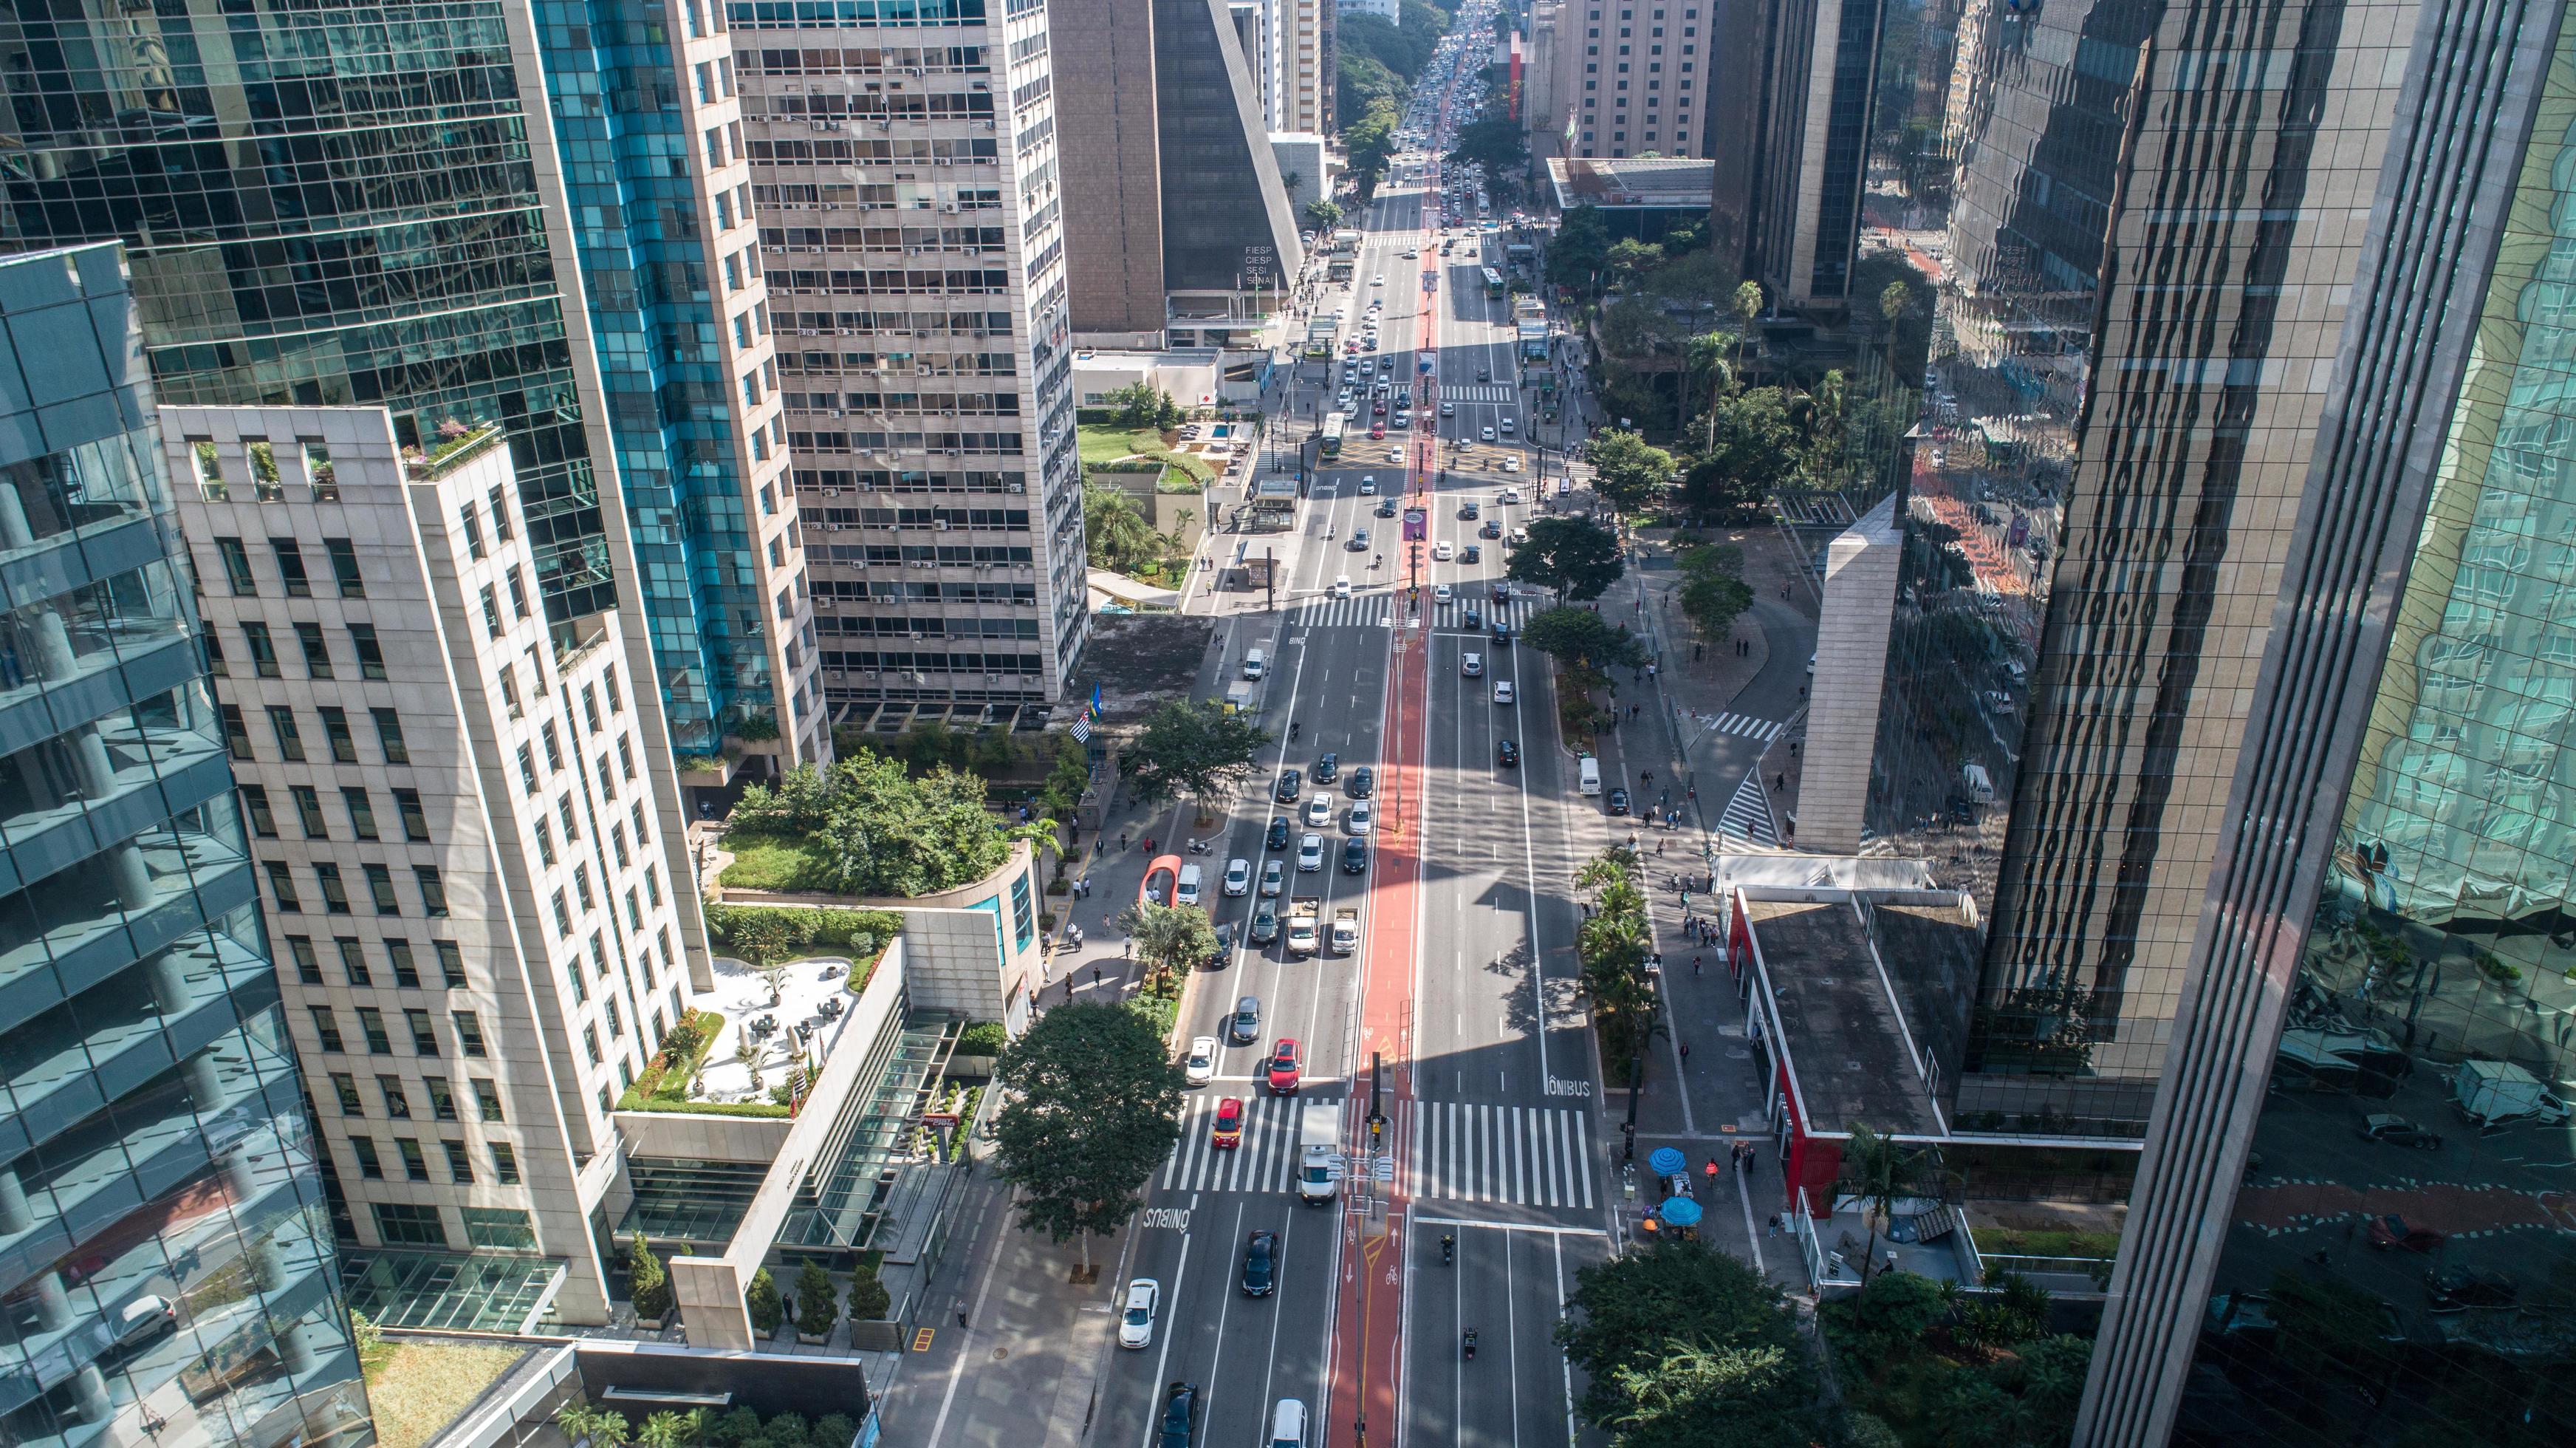 Sao Paulo, Brazil, May 2019 - Aerial view of Avenida Paulista